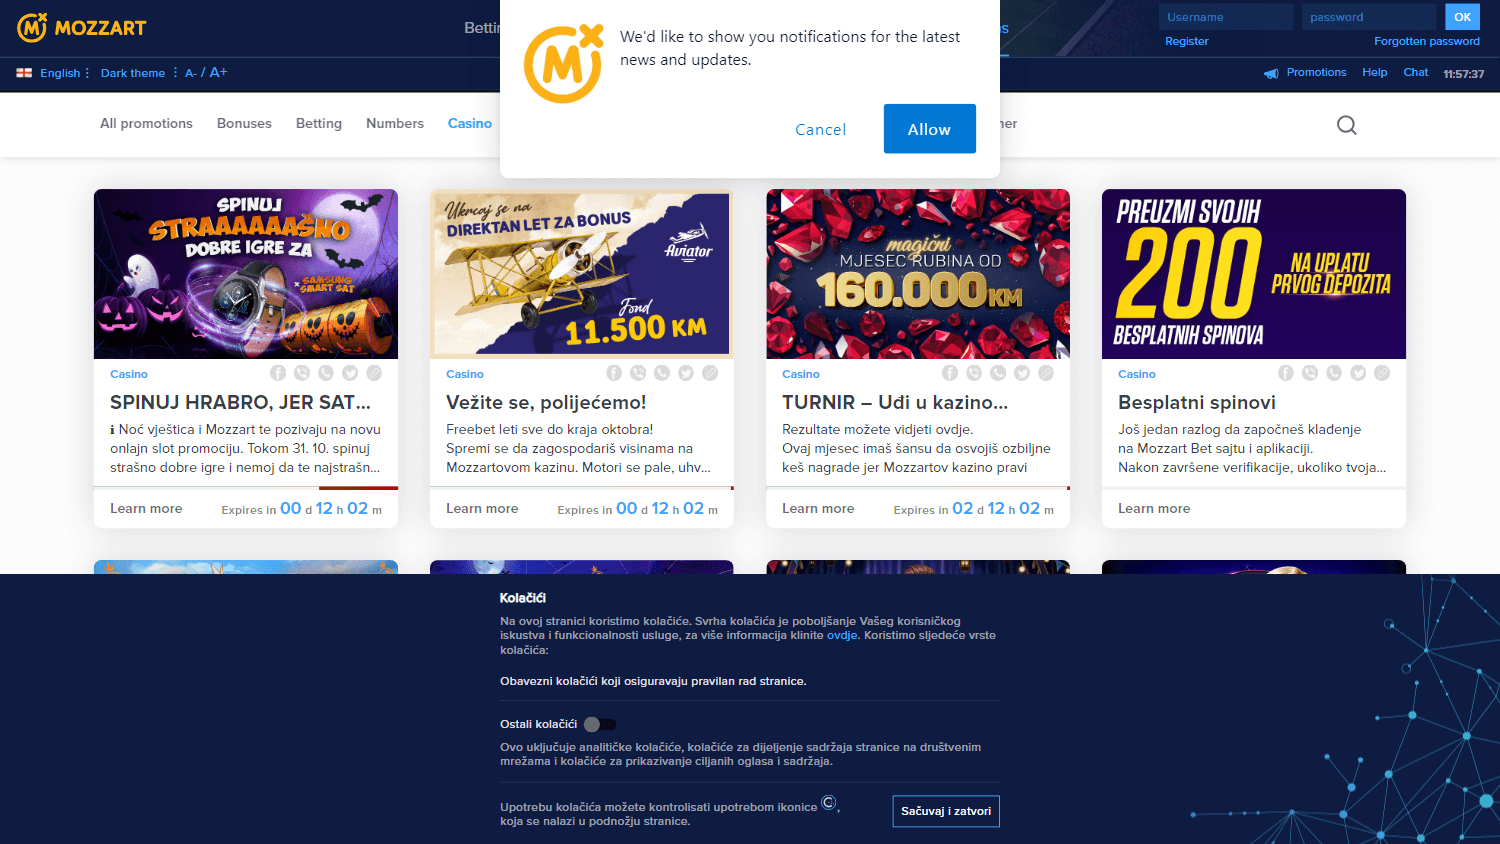 mozzart_casino_ba_promotions_desktop